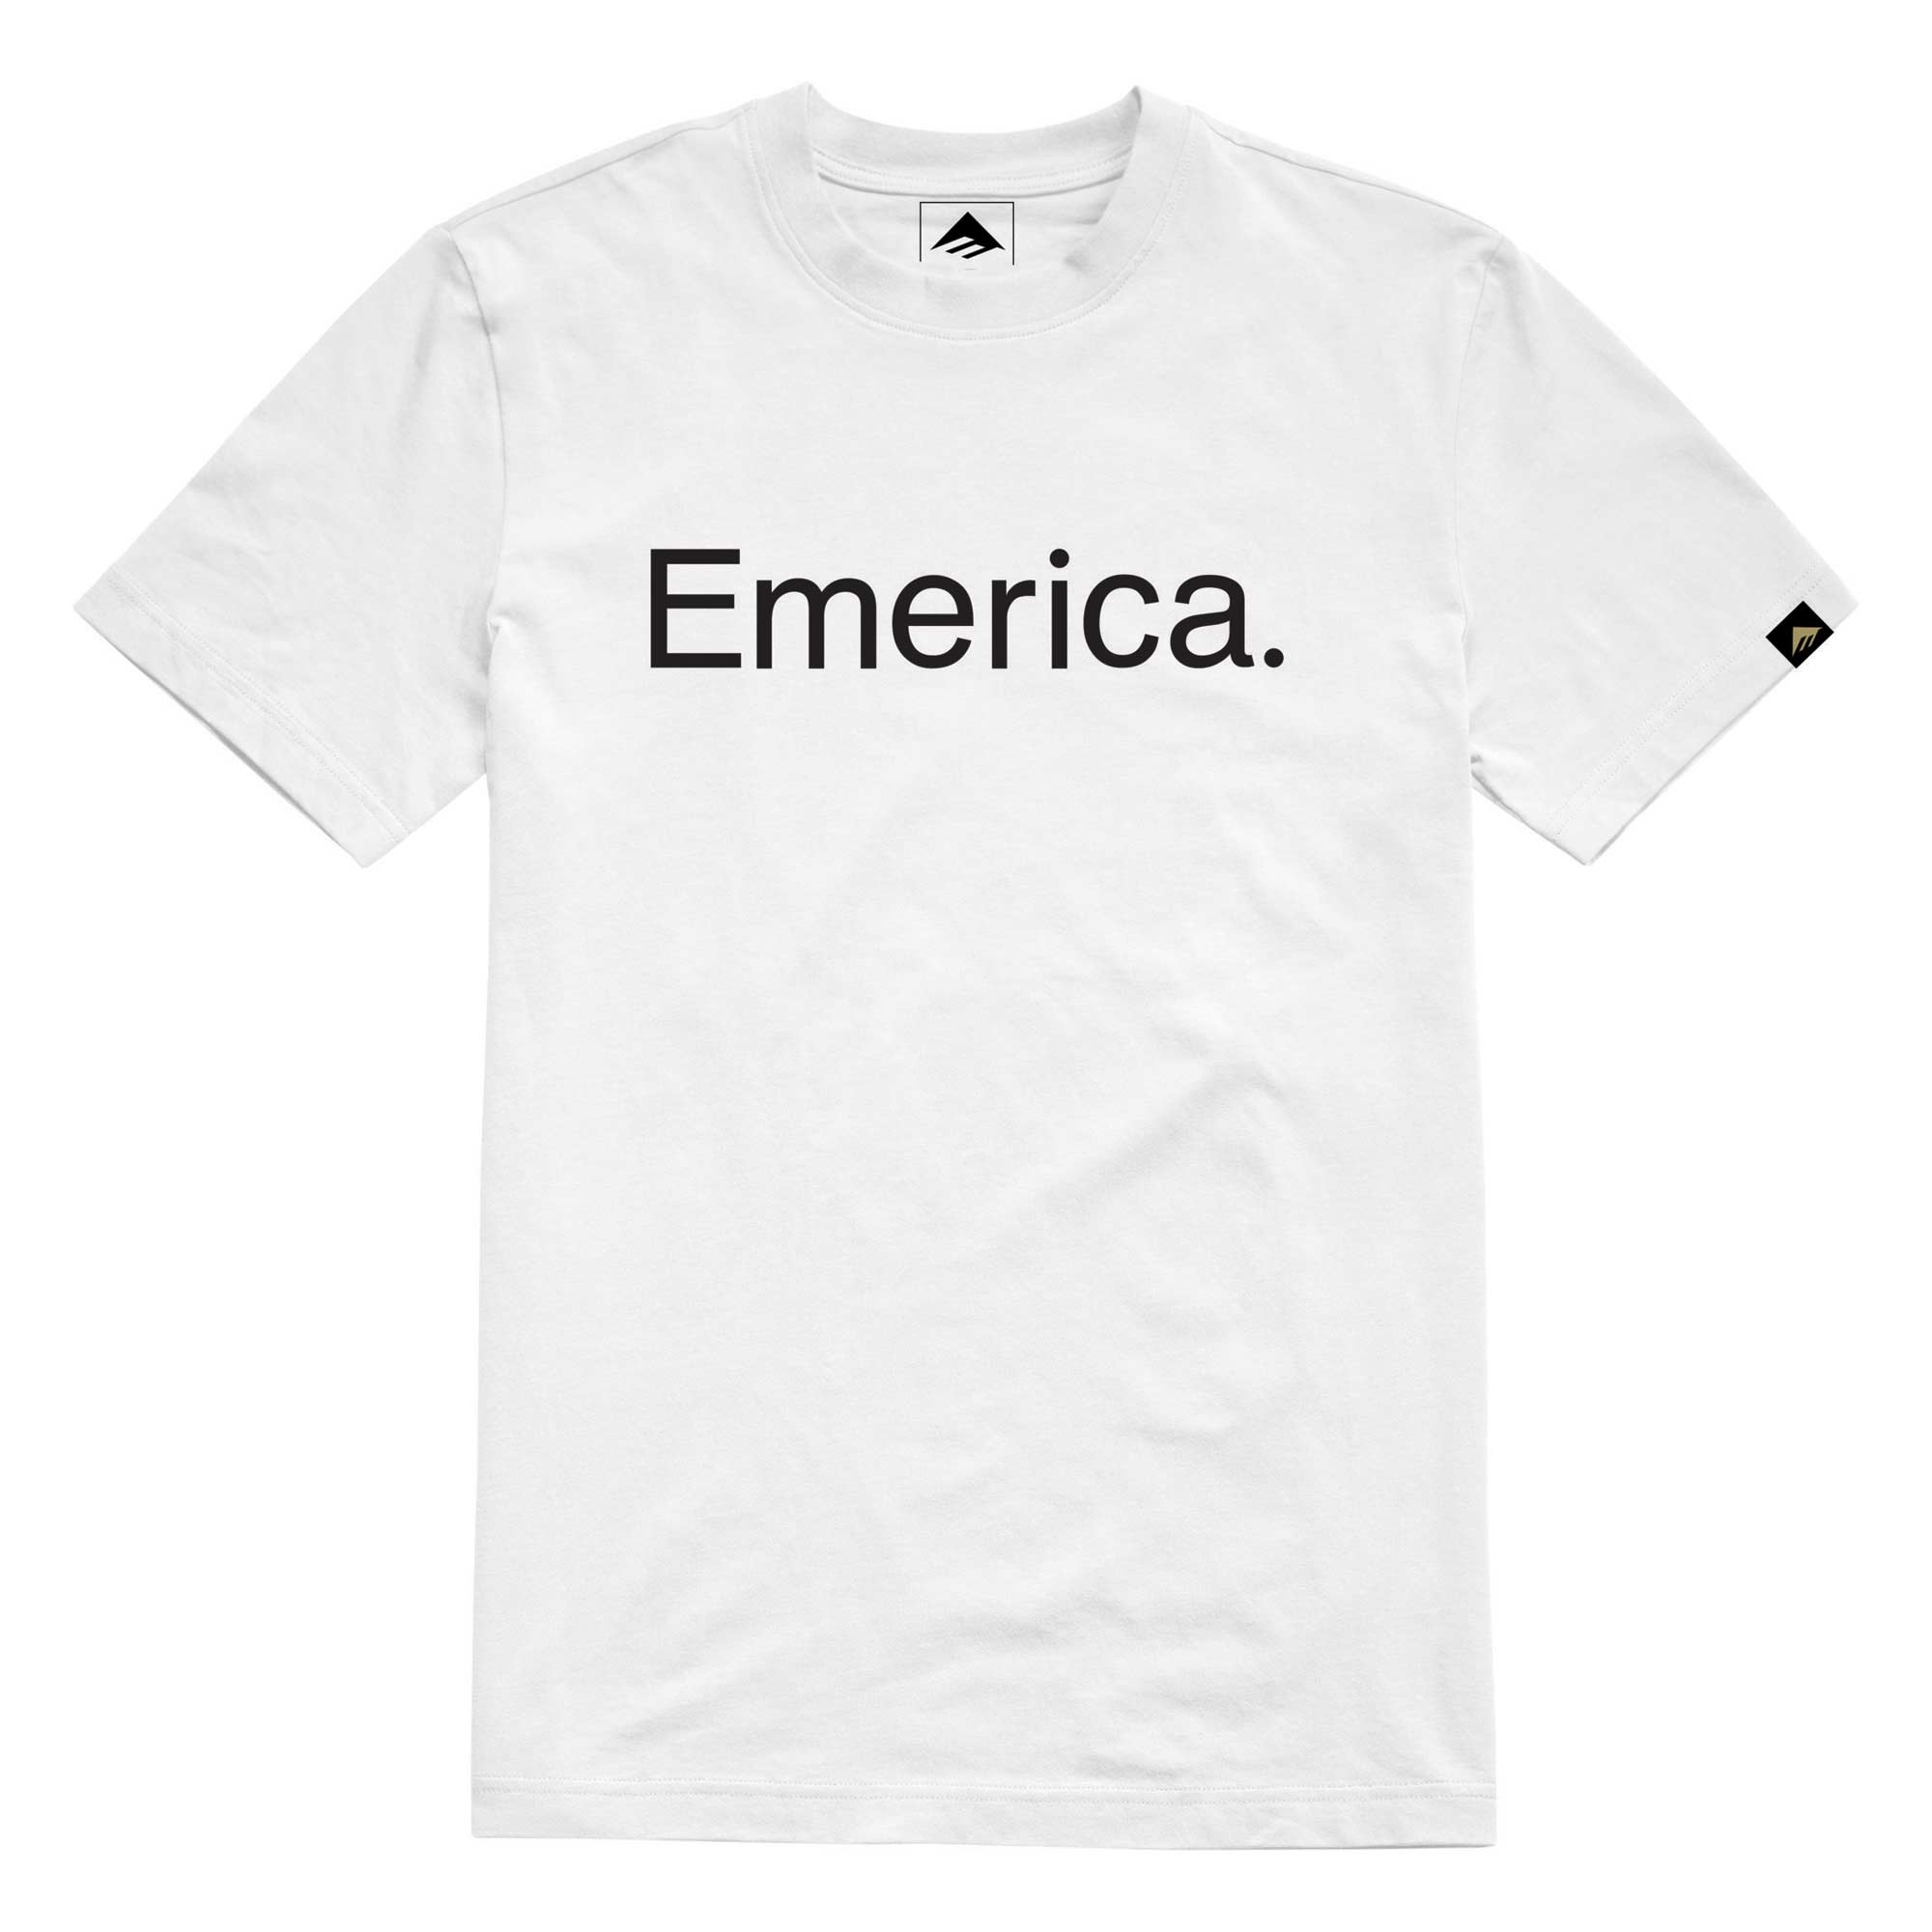 EMERICA T-Shirt PURE 2 white